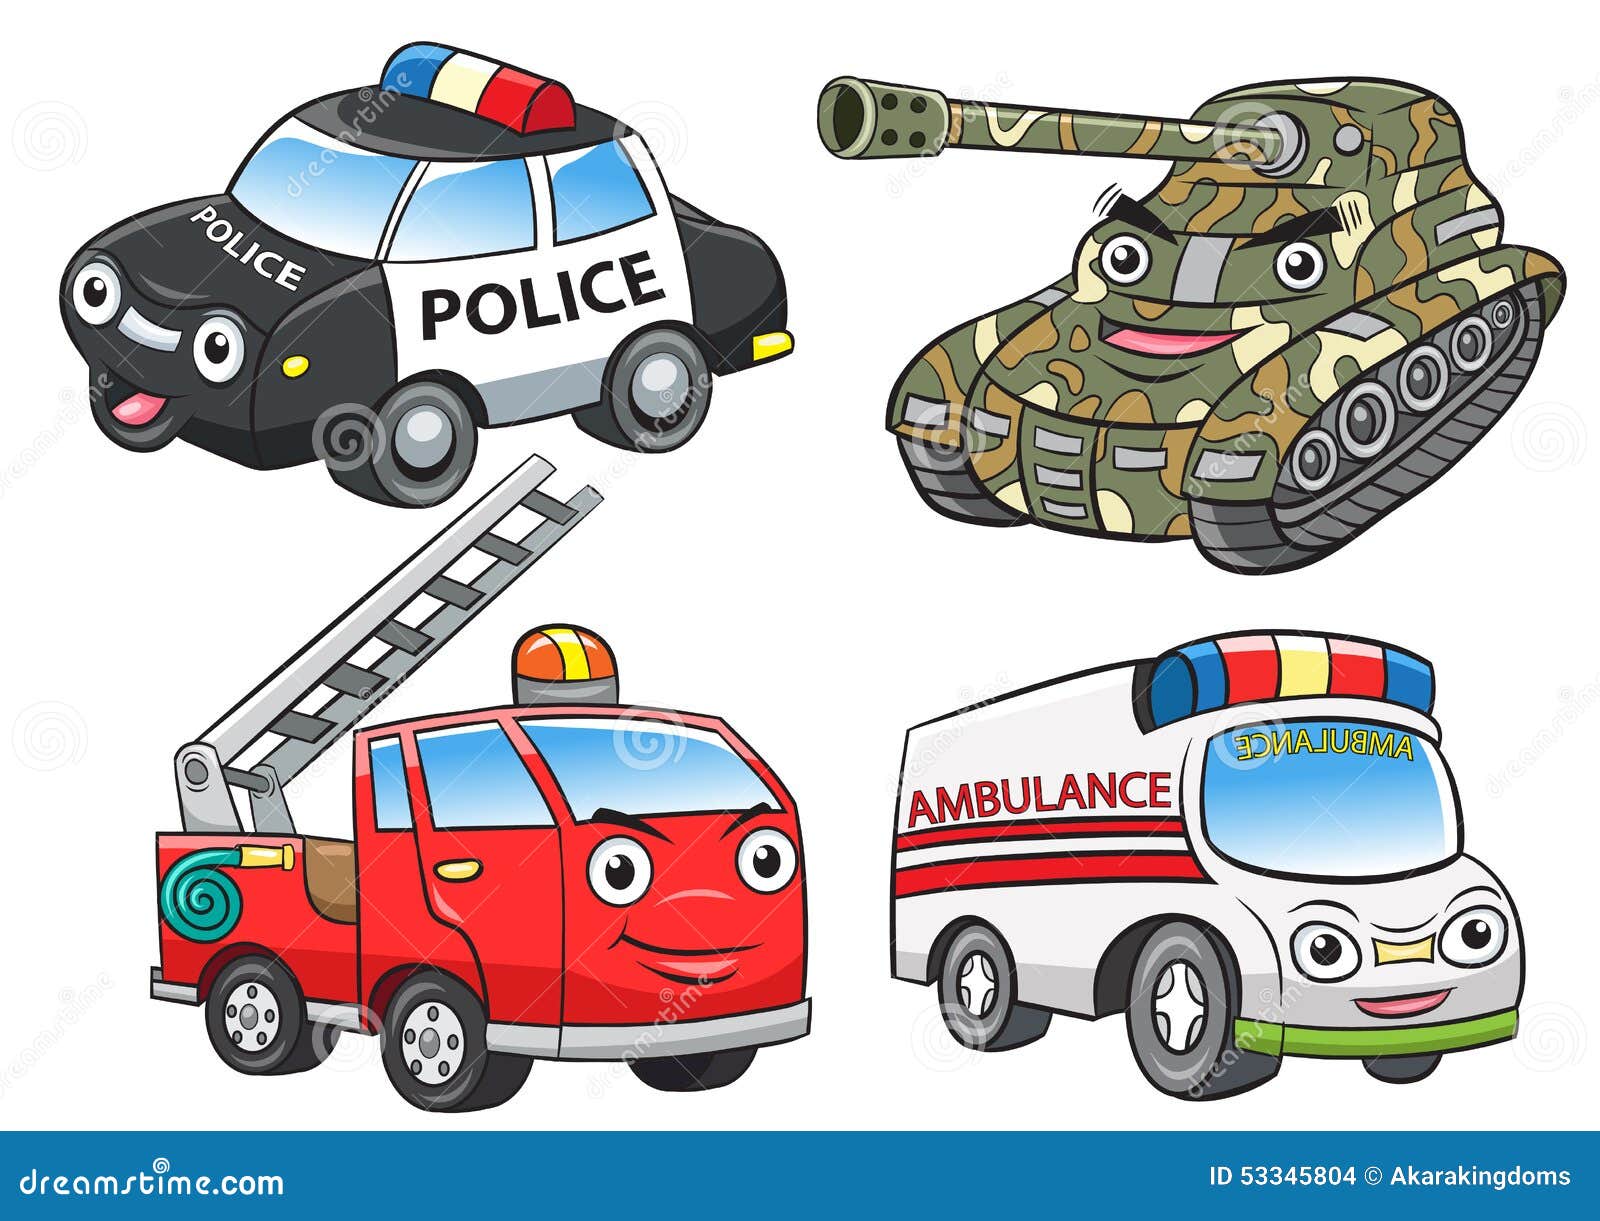 Police Fire Ambulance Tank Cartoon Illustration 53345804 - Megapixl